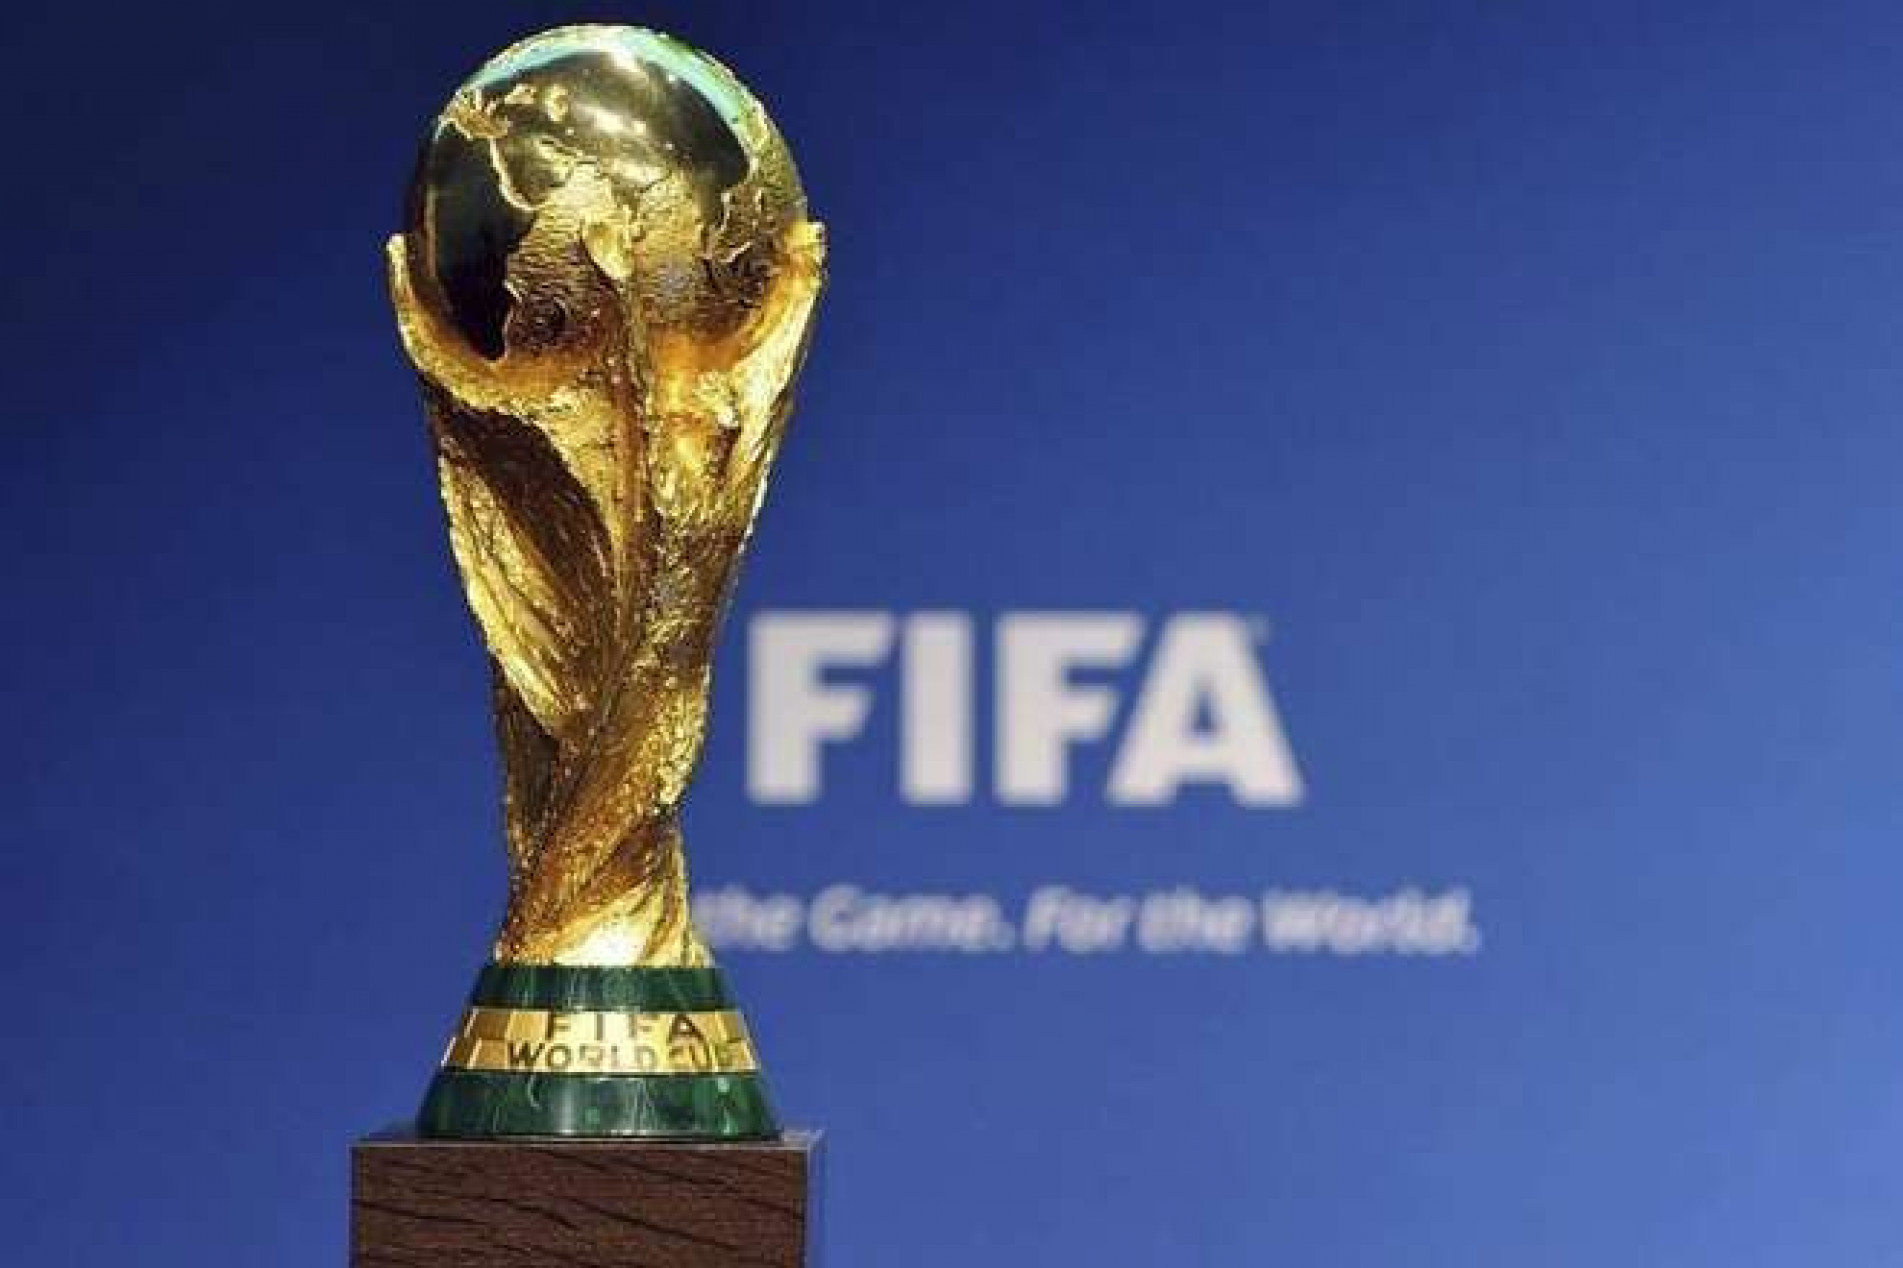 Copa do Mundo de 2026 pode chegar a ter até 104 jogos